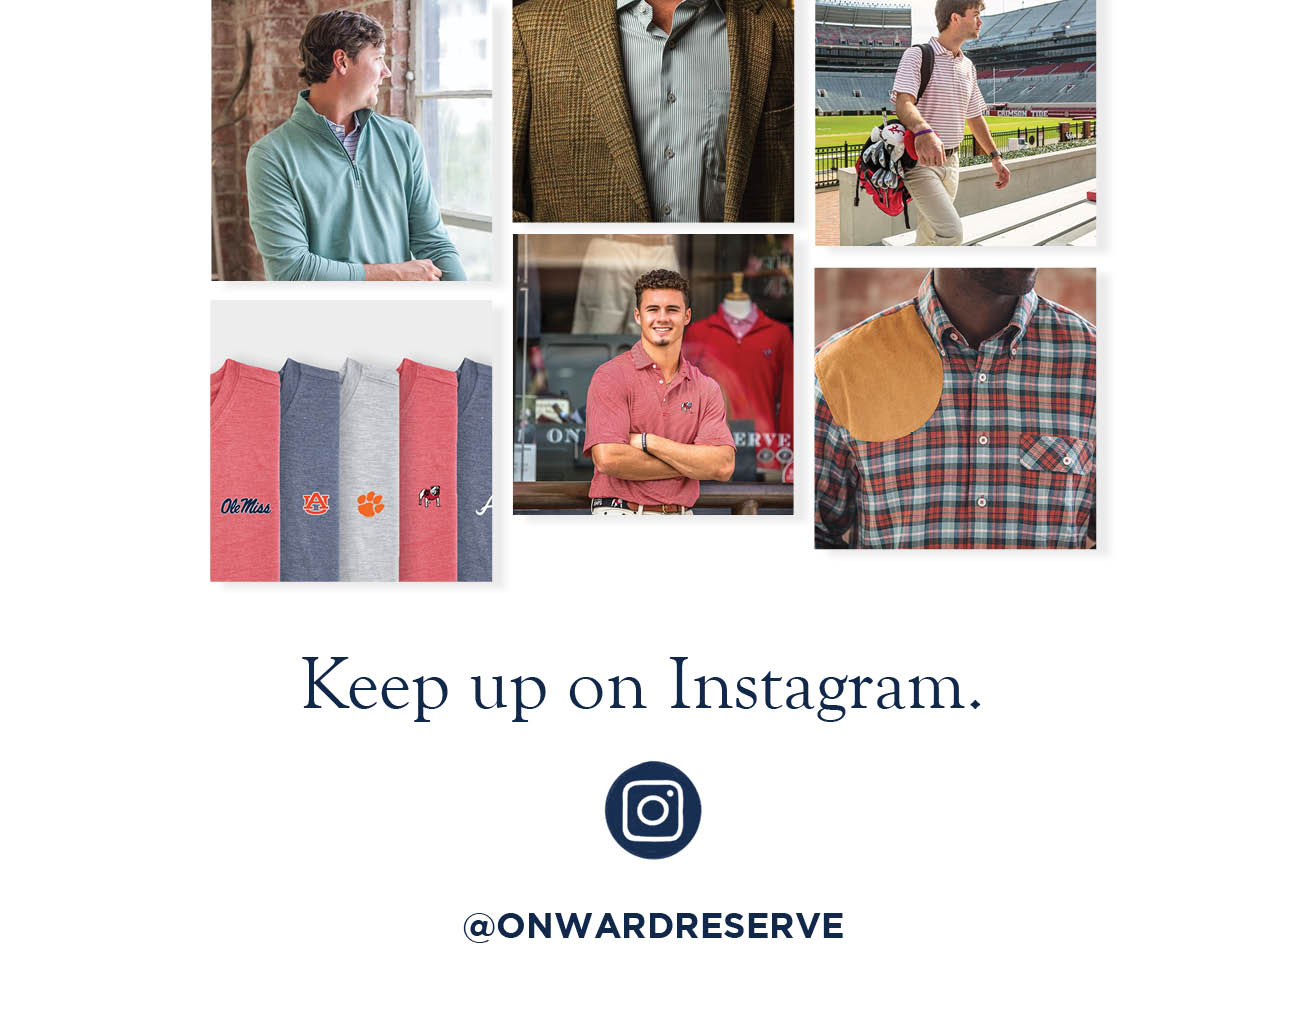 Follow @onwardreserve on Instagram